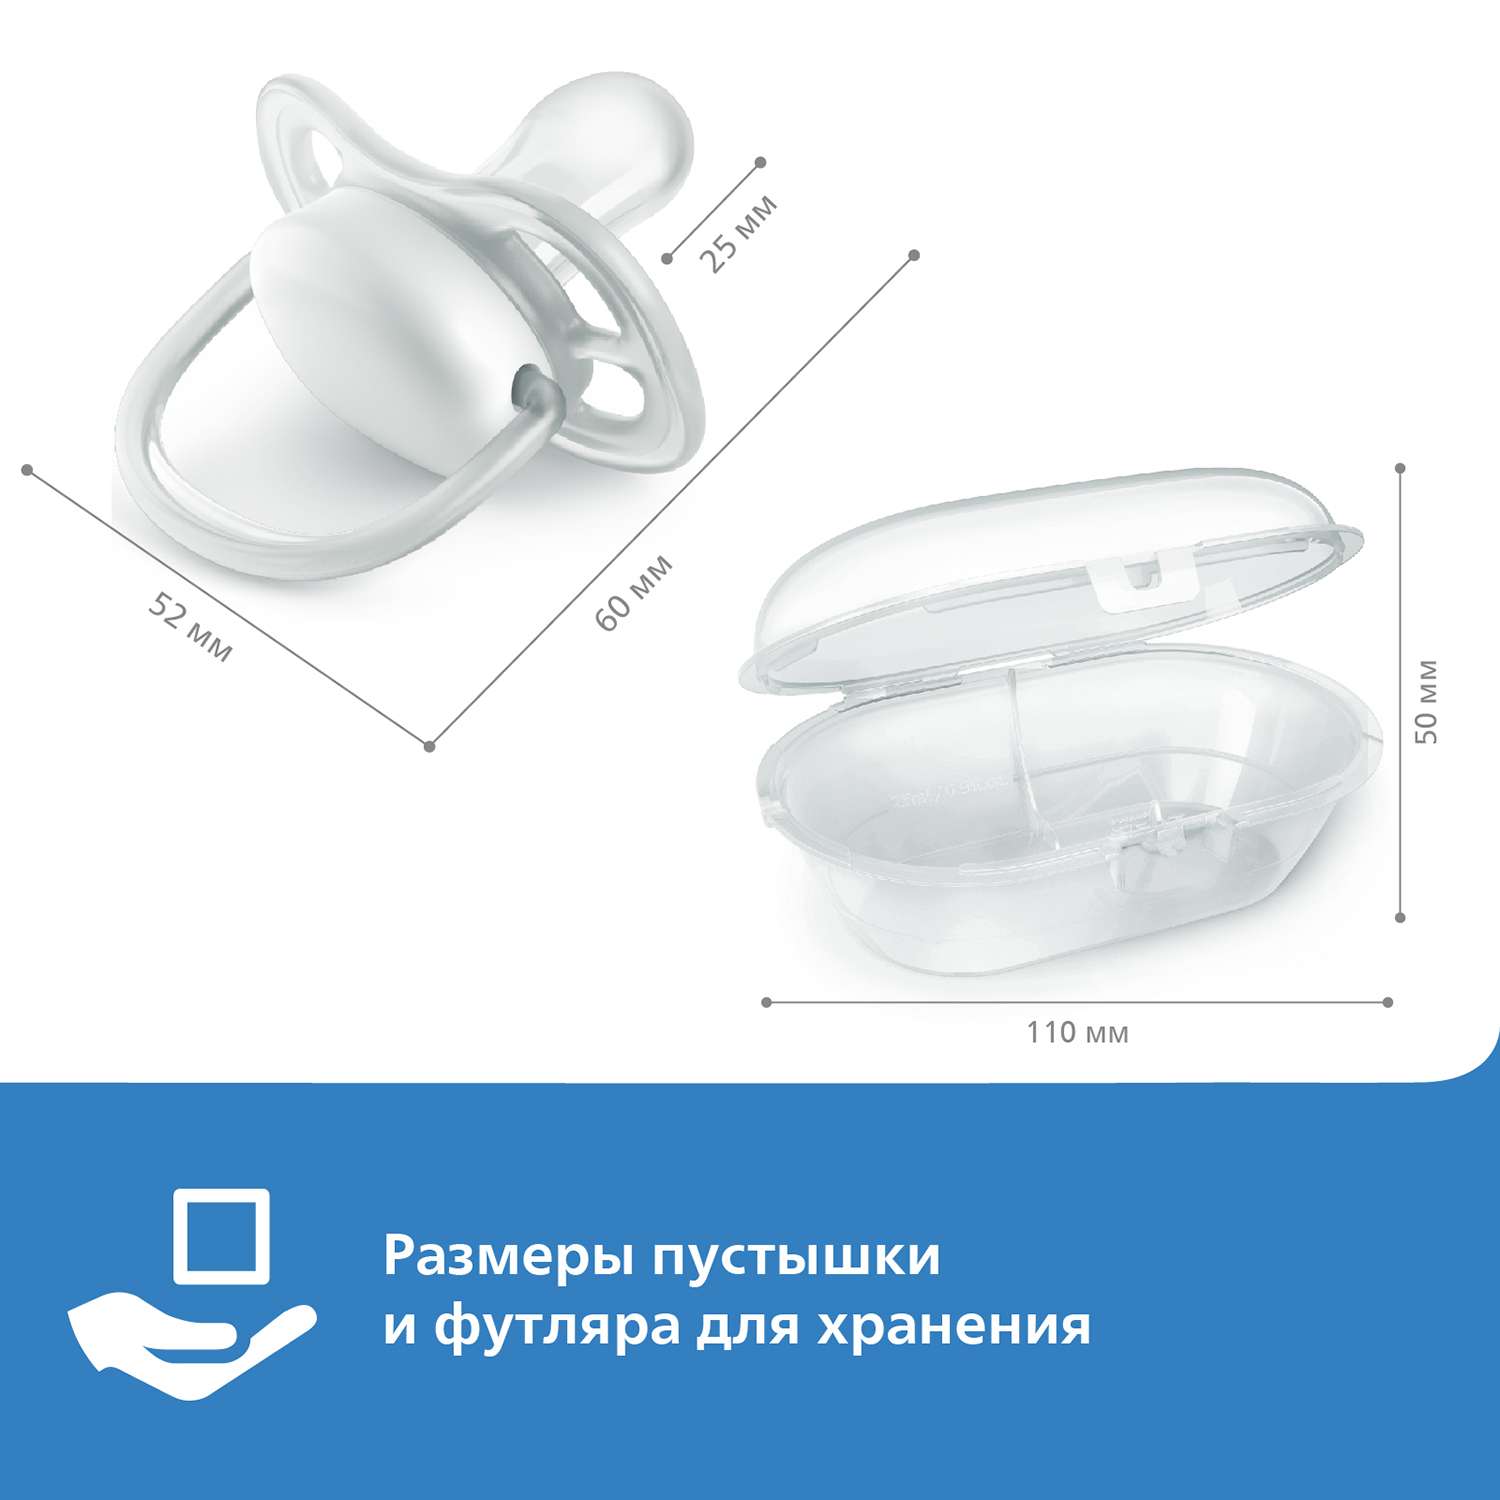 Пустышка Philips Avent ultra air с футляром для хранения и стерилизации 2шт 6-18 месяцев SCF085/03 - фото 10